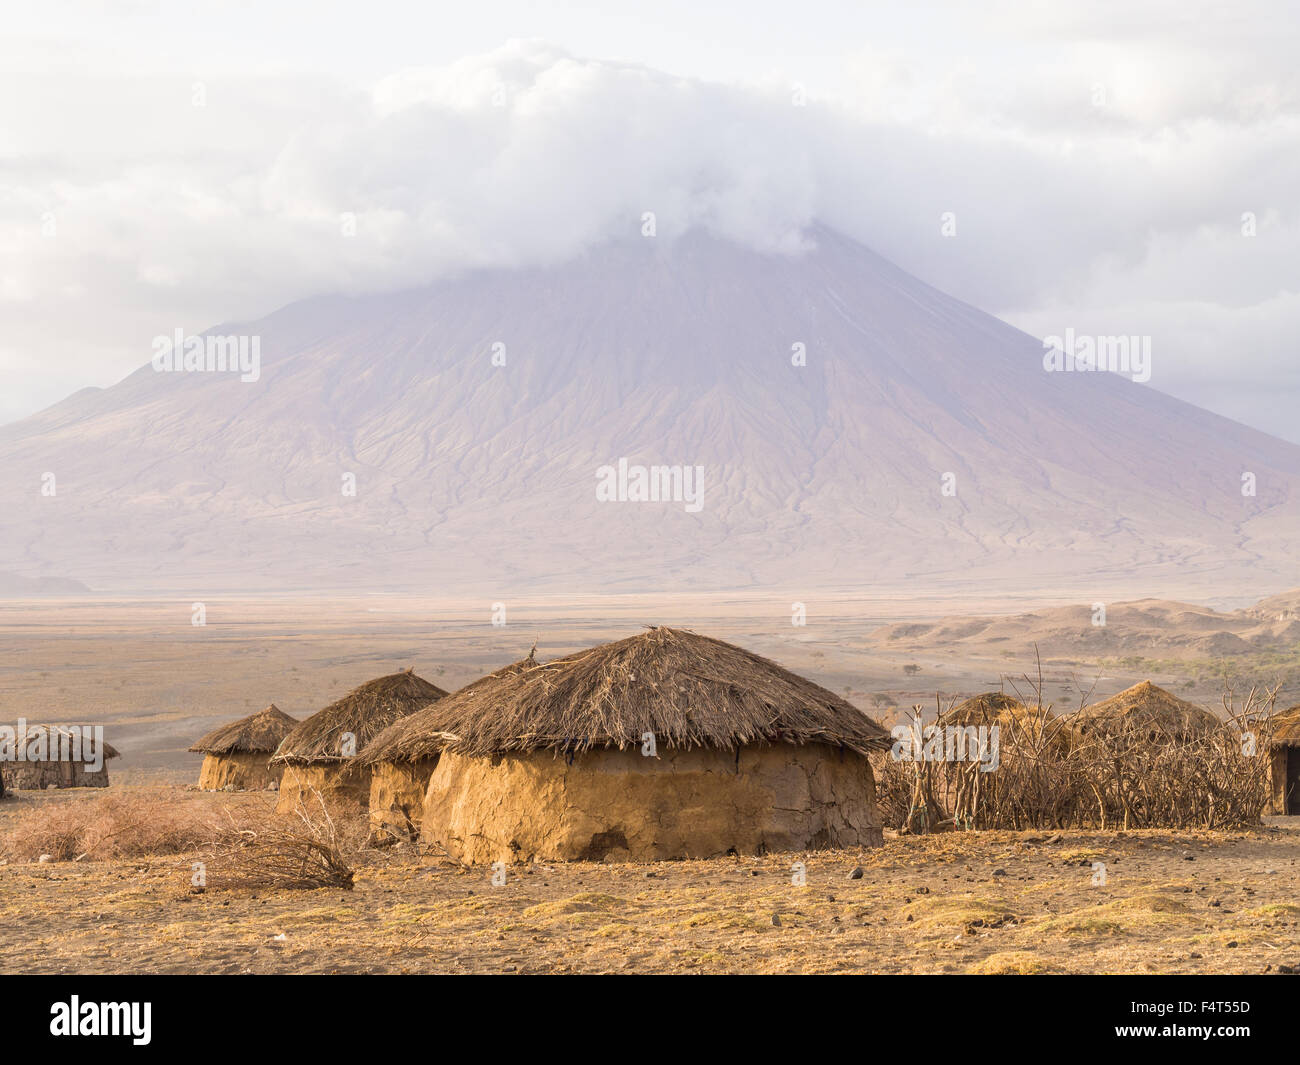 Maasai village in front of the Ol Doinyo Lengai (Mountain of God in the Maasai language) in Tanzania, Africa. Stock Photo